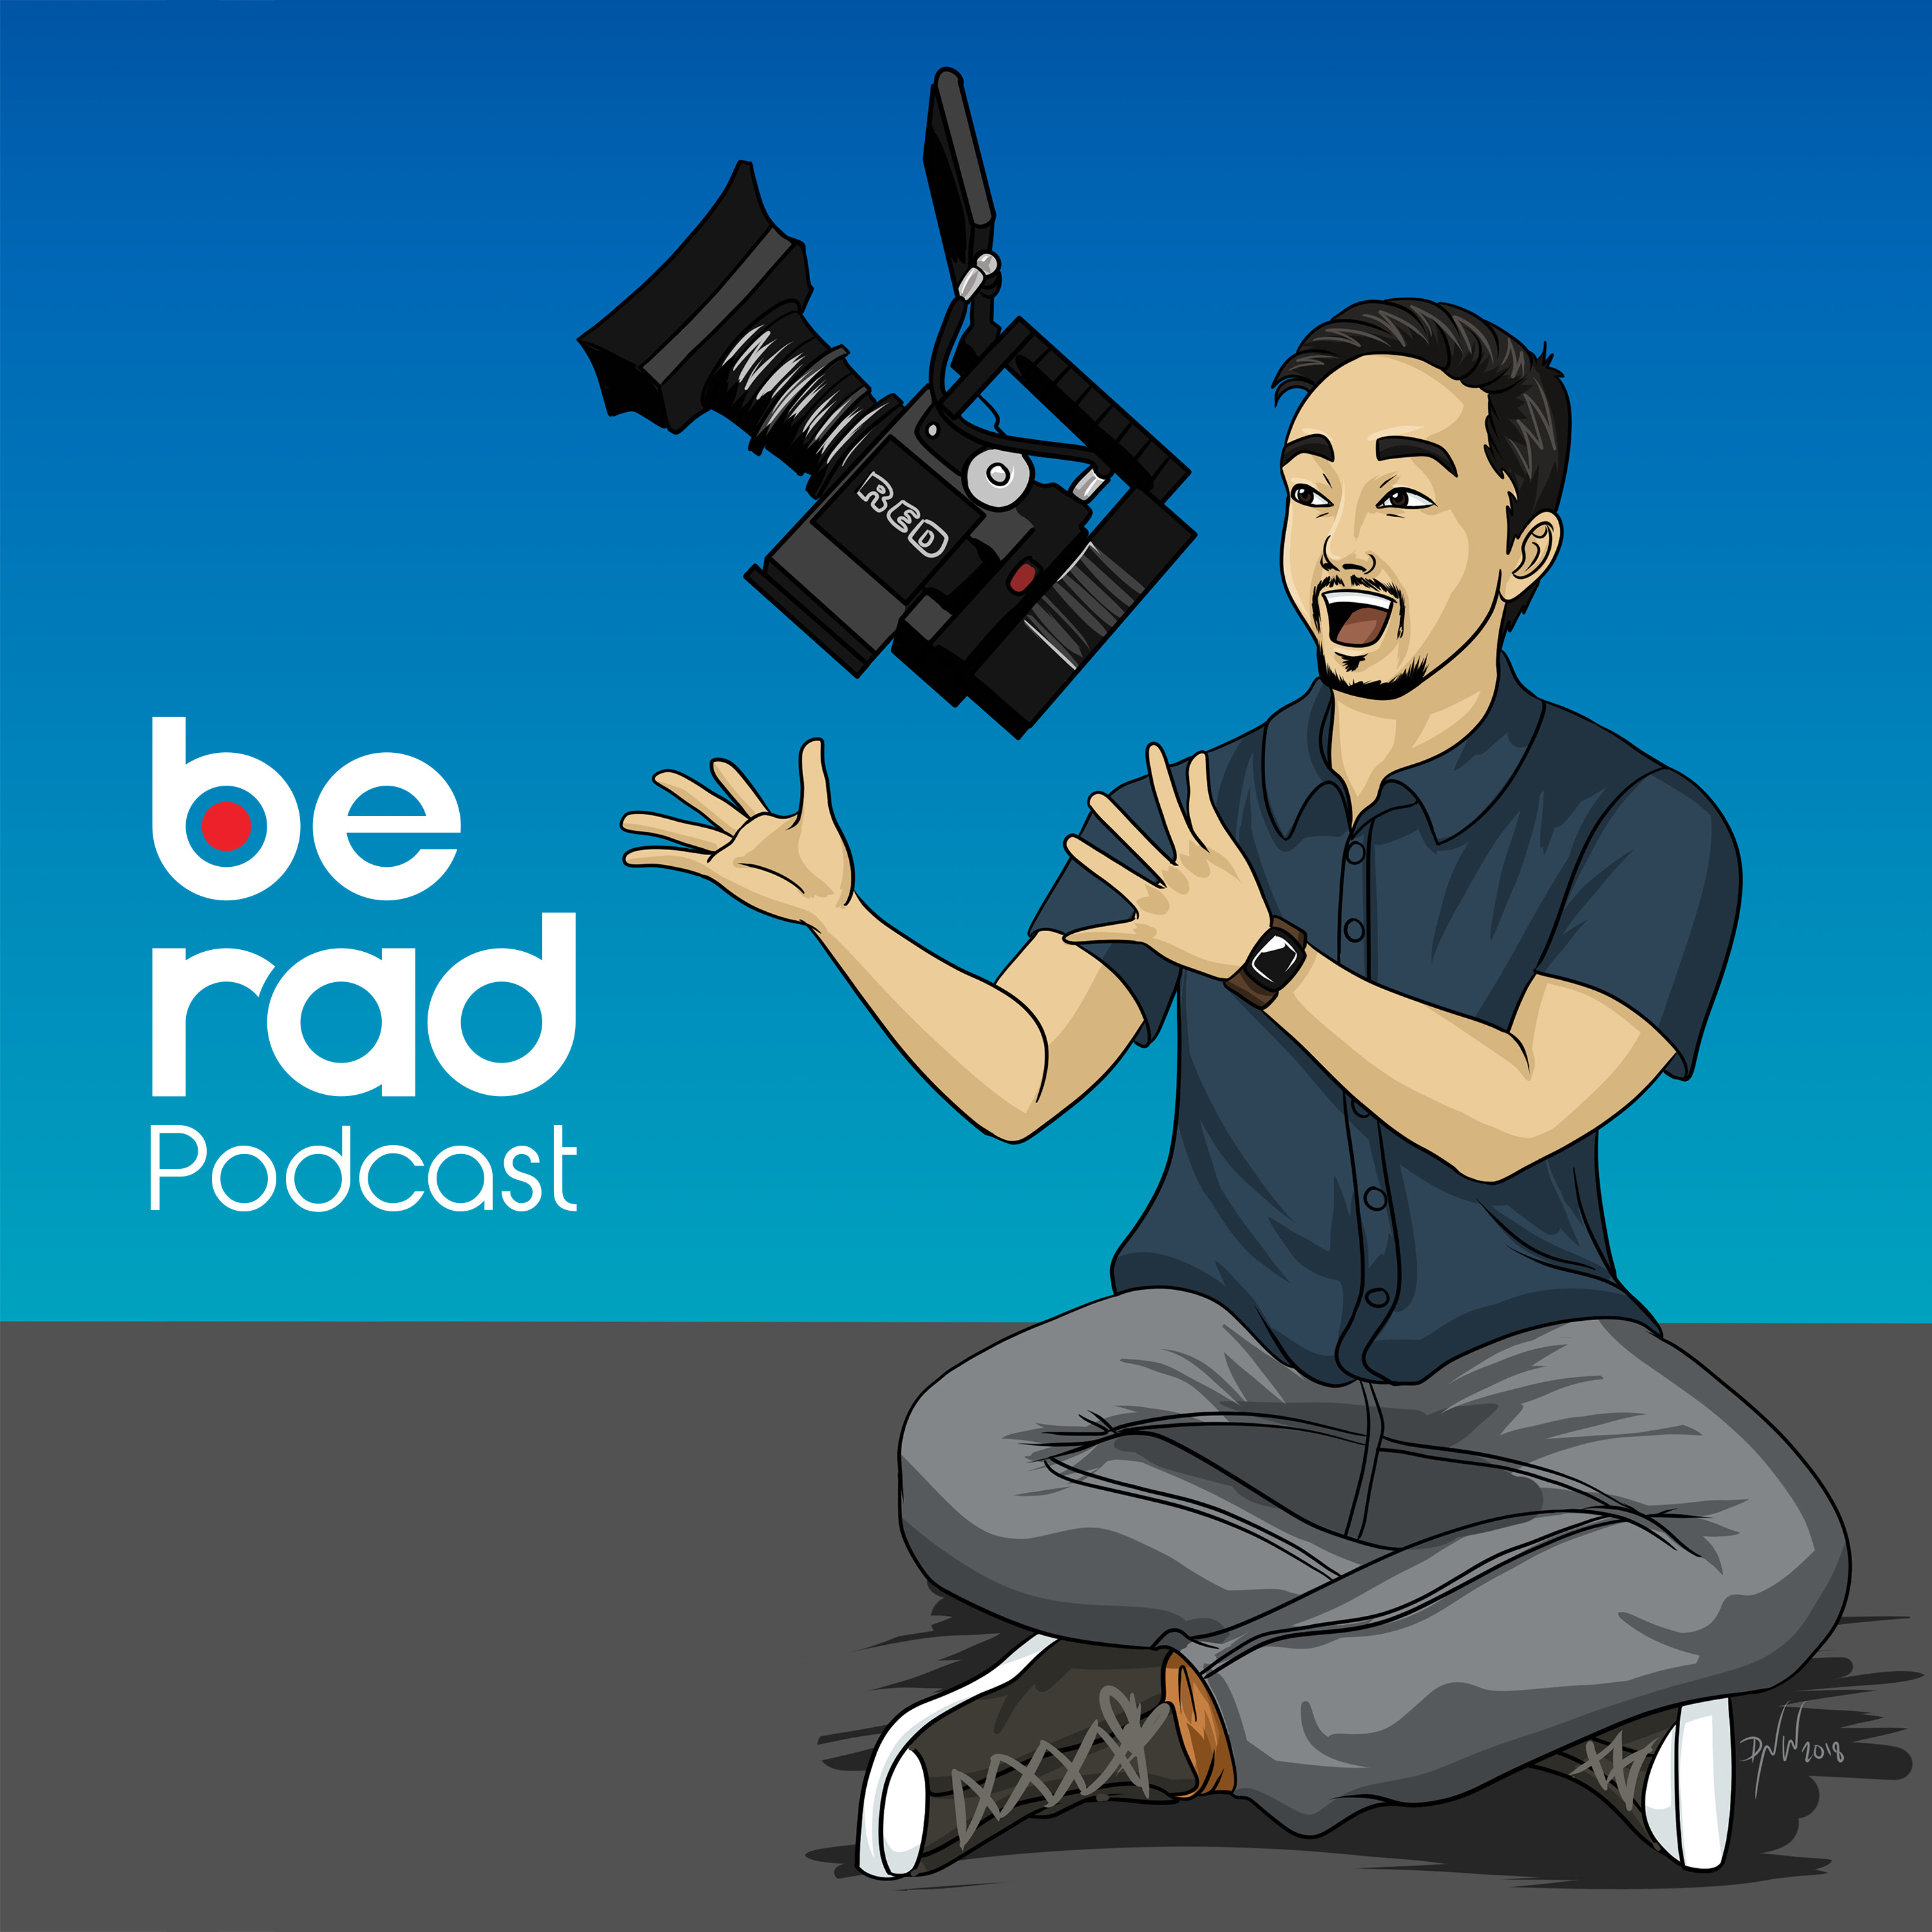 Berad Podcast